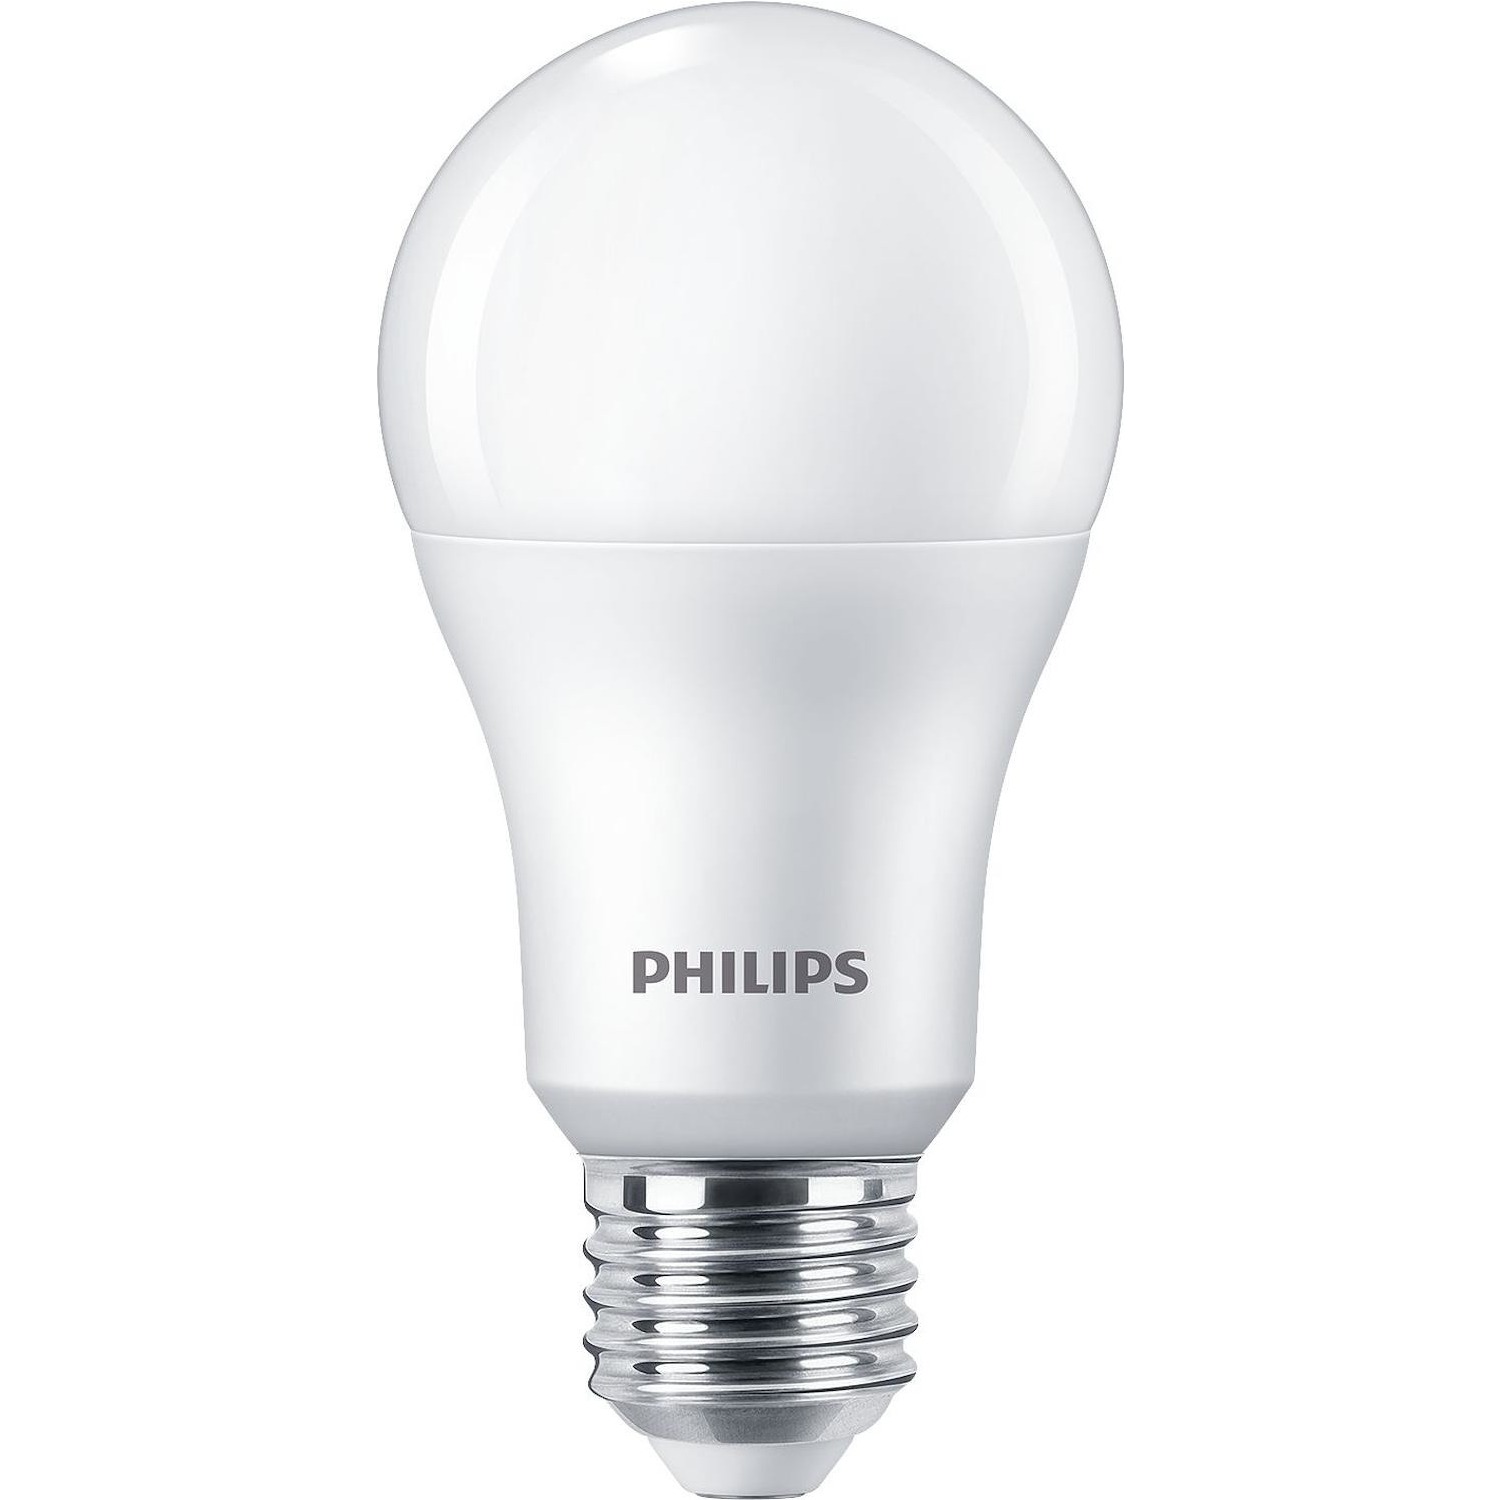 Immagine per Lampadina LED discount Philips goccia 100W E27    2700K 3pz da DIMOStore